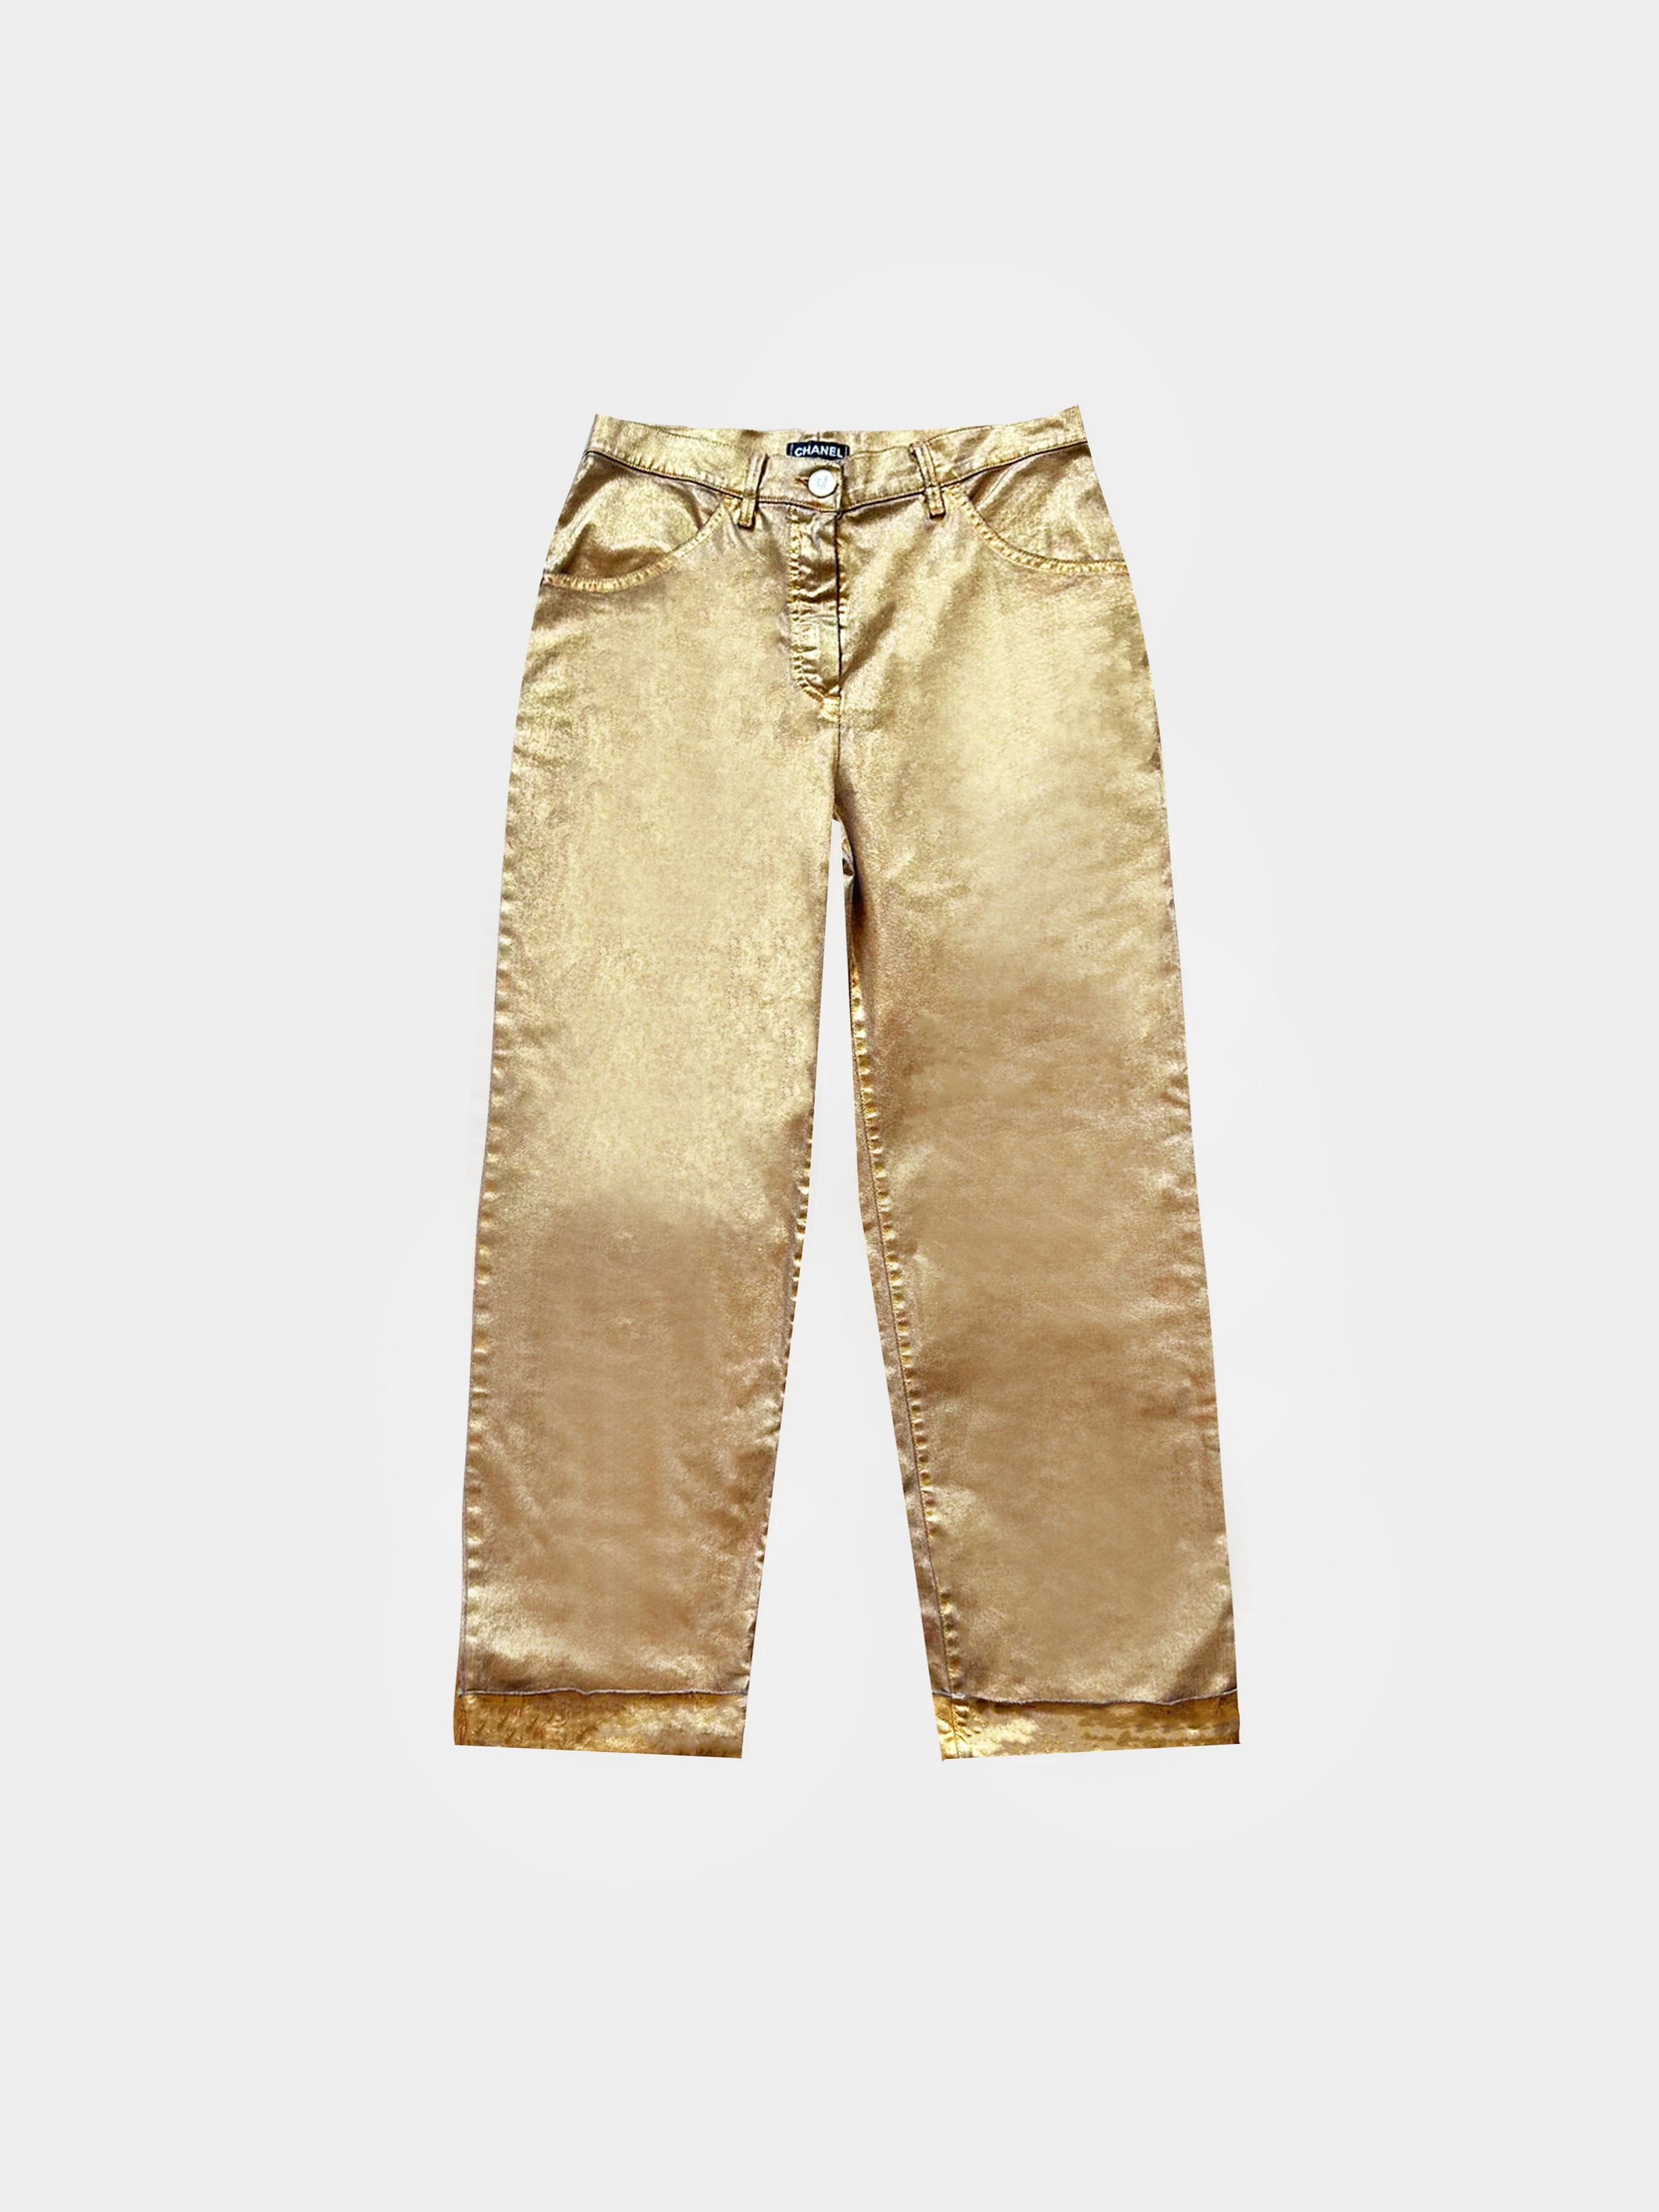 Chanel 2015 Cruise Dubai Gold Metallic Coated Jeans